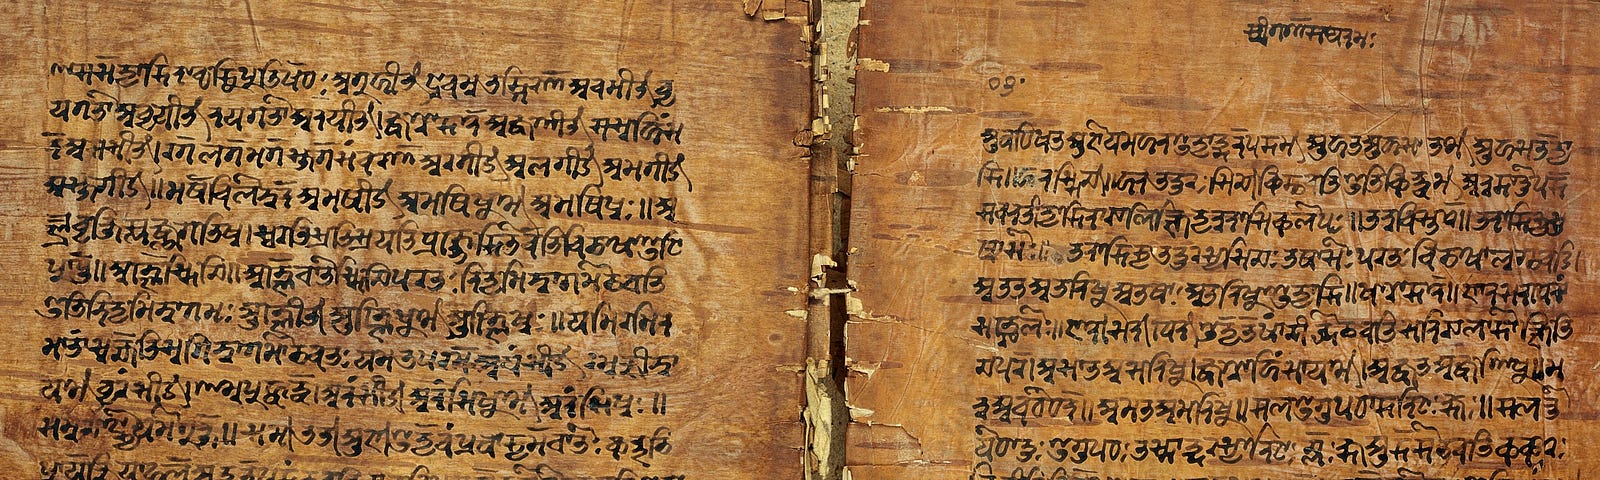 Birch bark manuscript from Kashmir of the Rupavatra, a grammatical textbook based on the Sanskrit grammar of Panini.